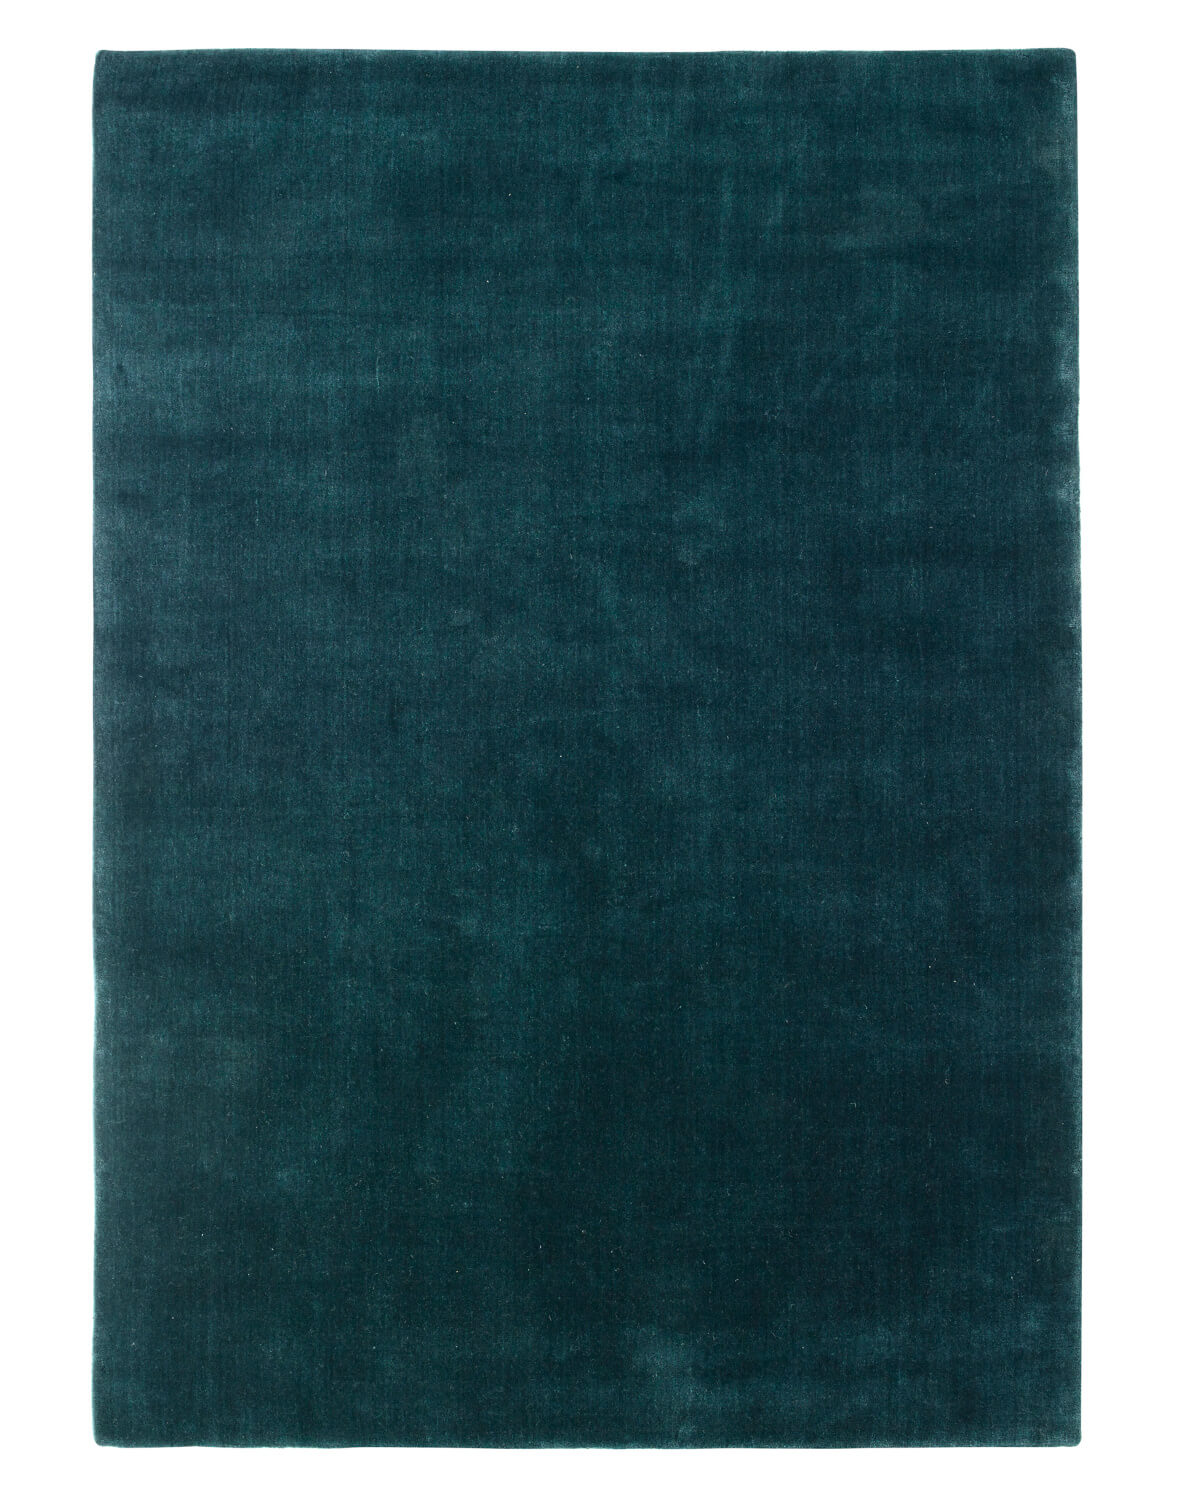 Earth Teppich, 170 x 240 cm, sea green